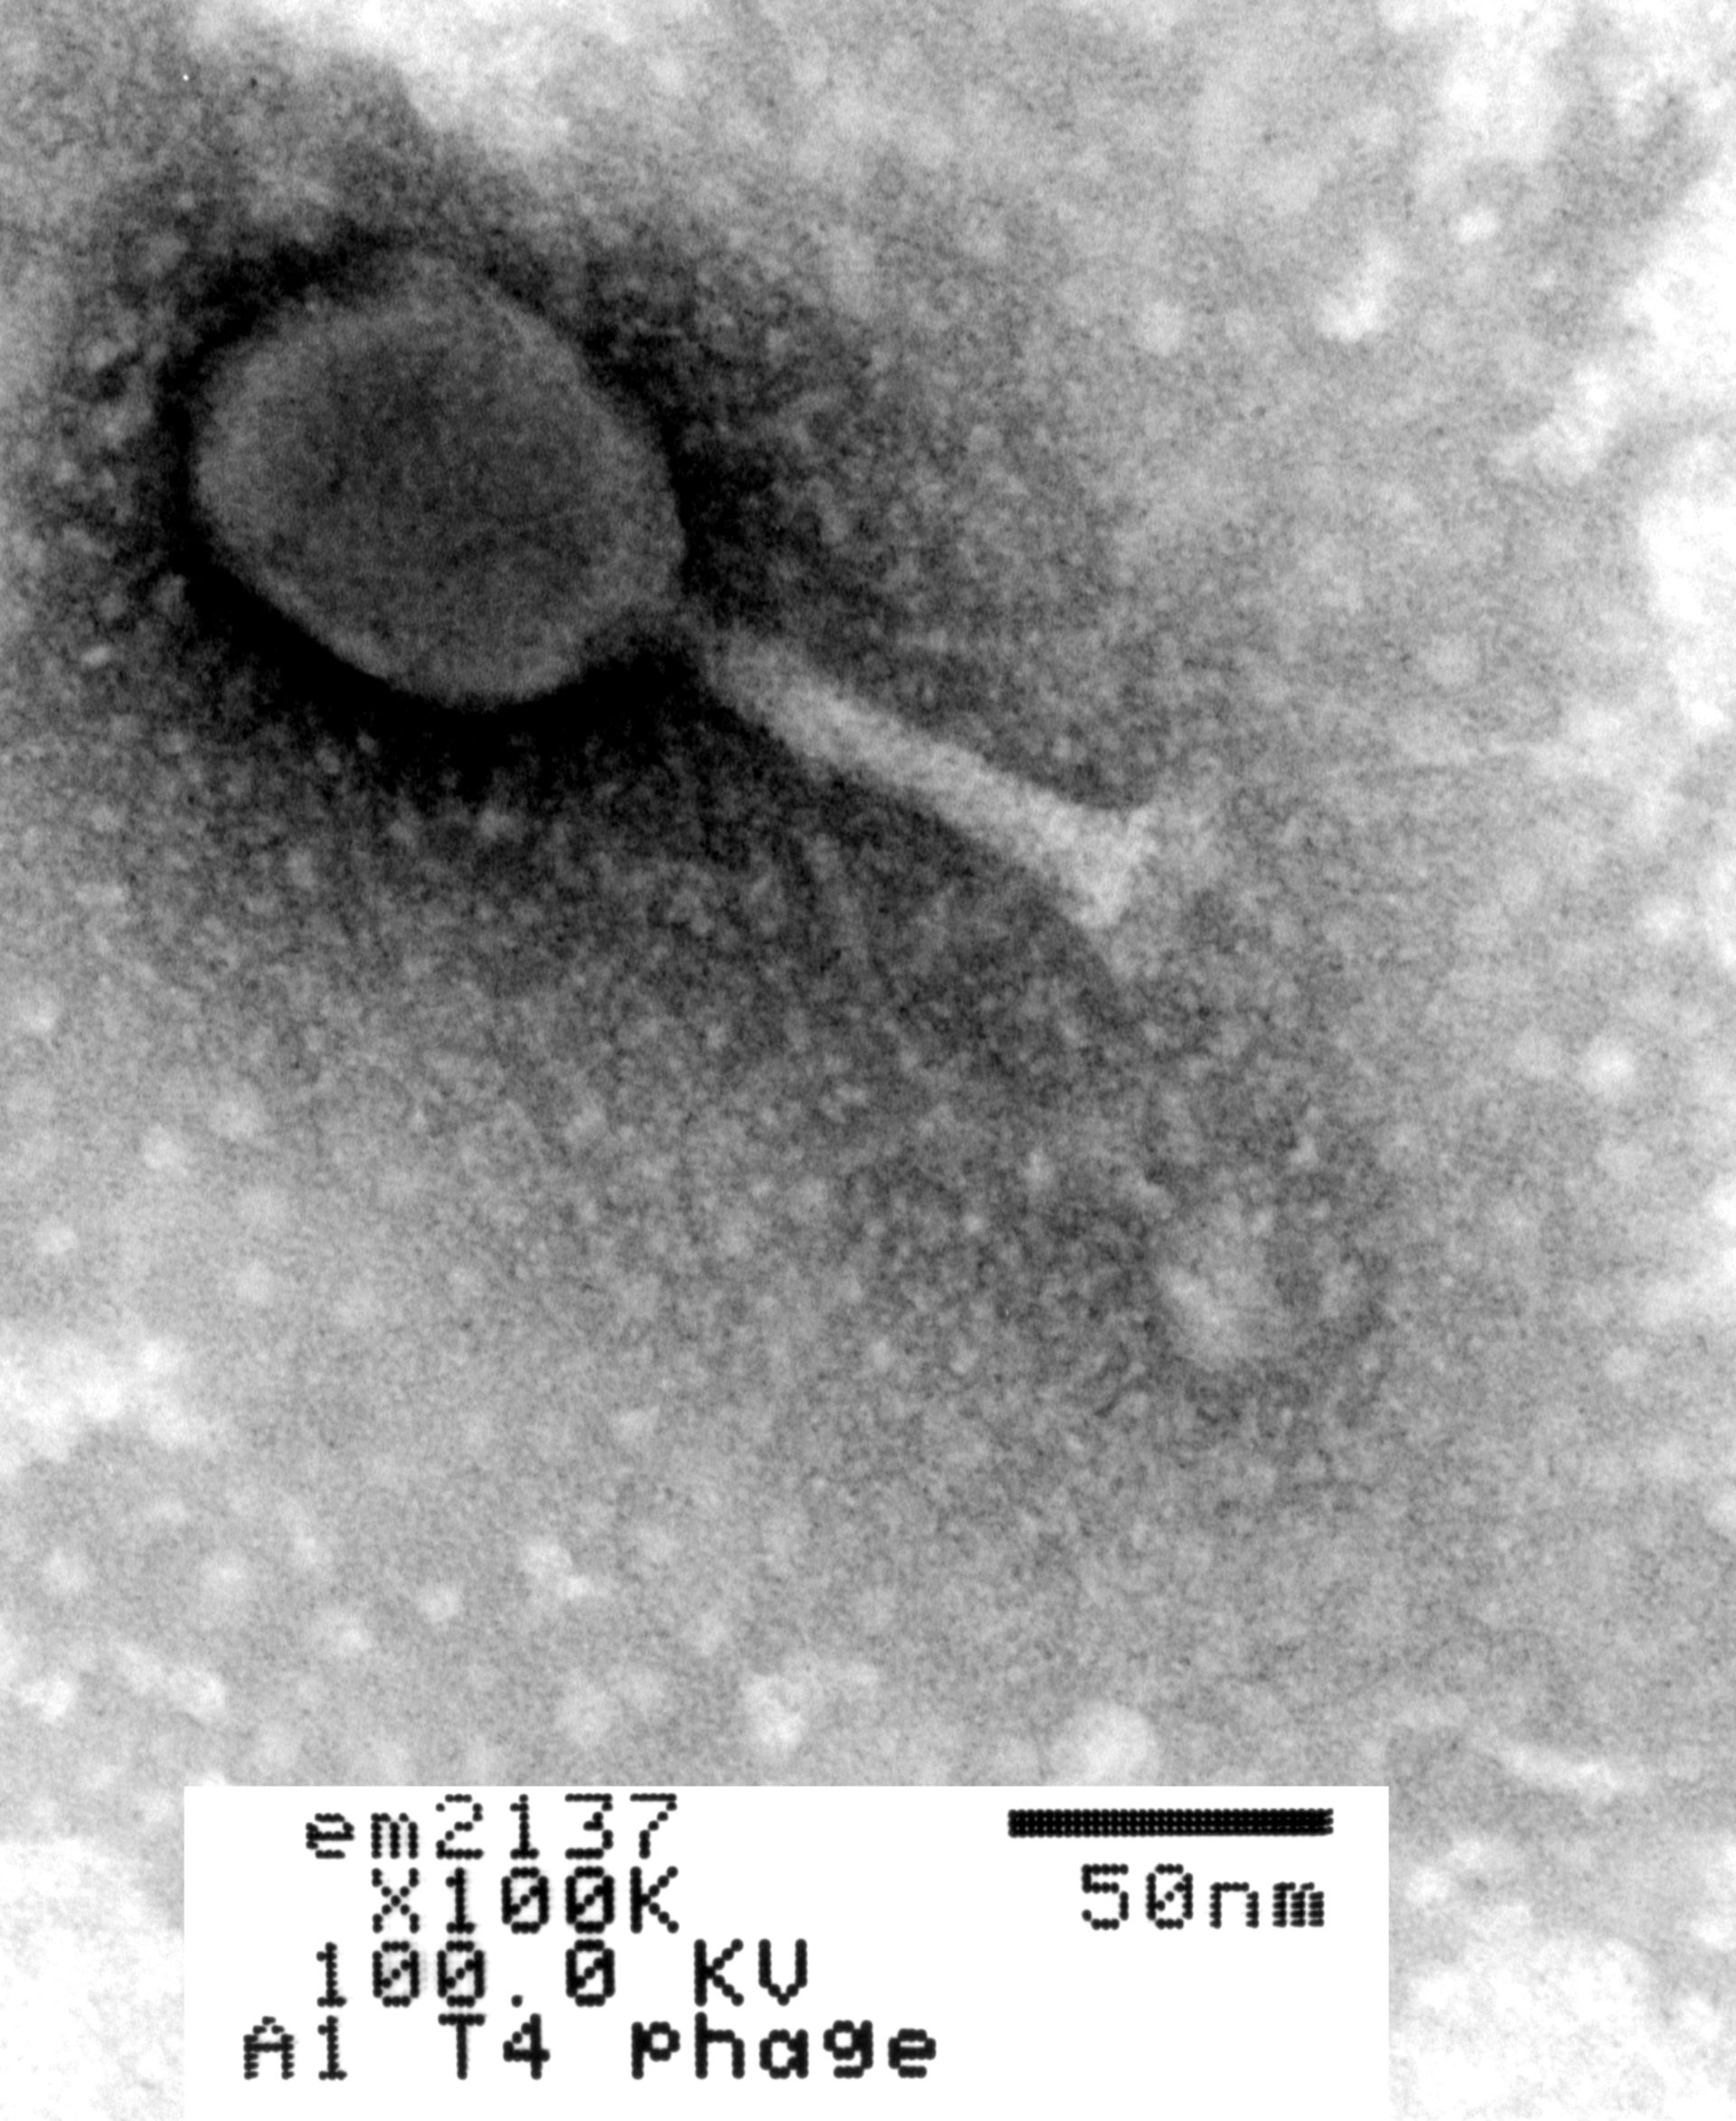 Enterobacteria phage T4 (Phage tail fibers) - CIL:41124